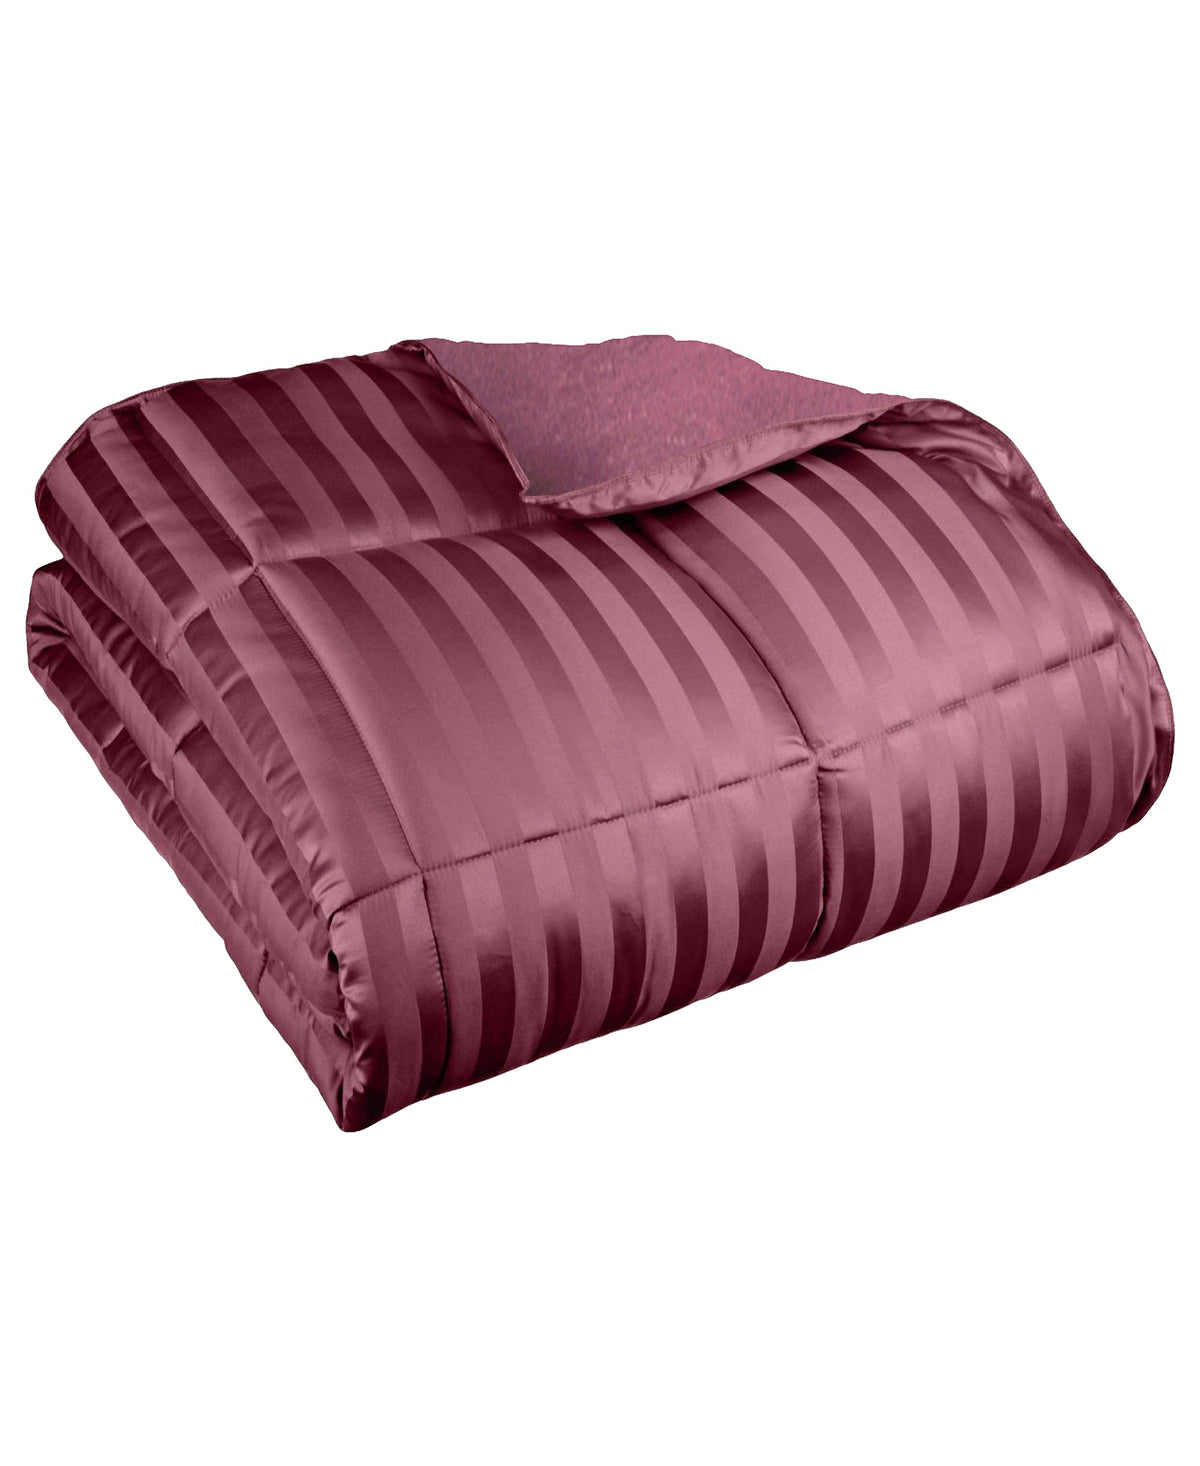 Reversible All Season Down Alternative Solid Bed Blanket - Plum